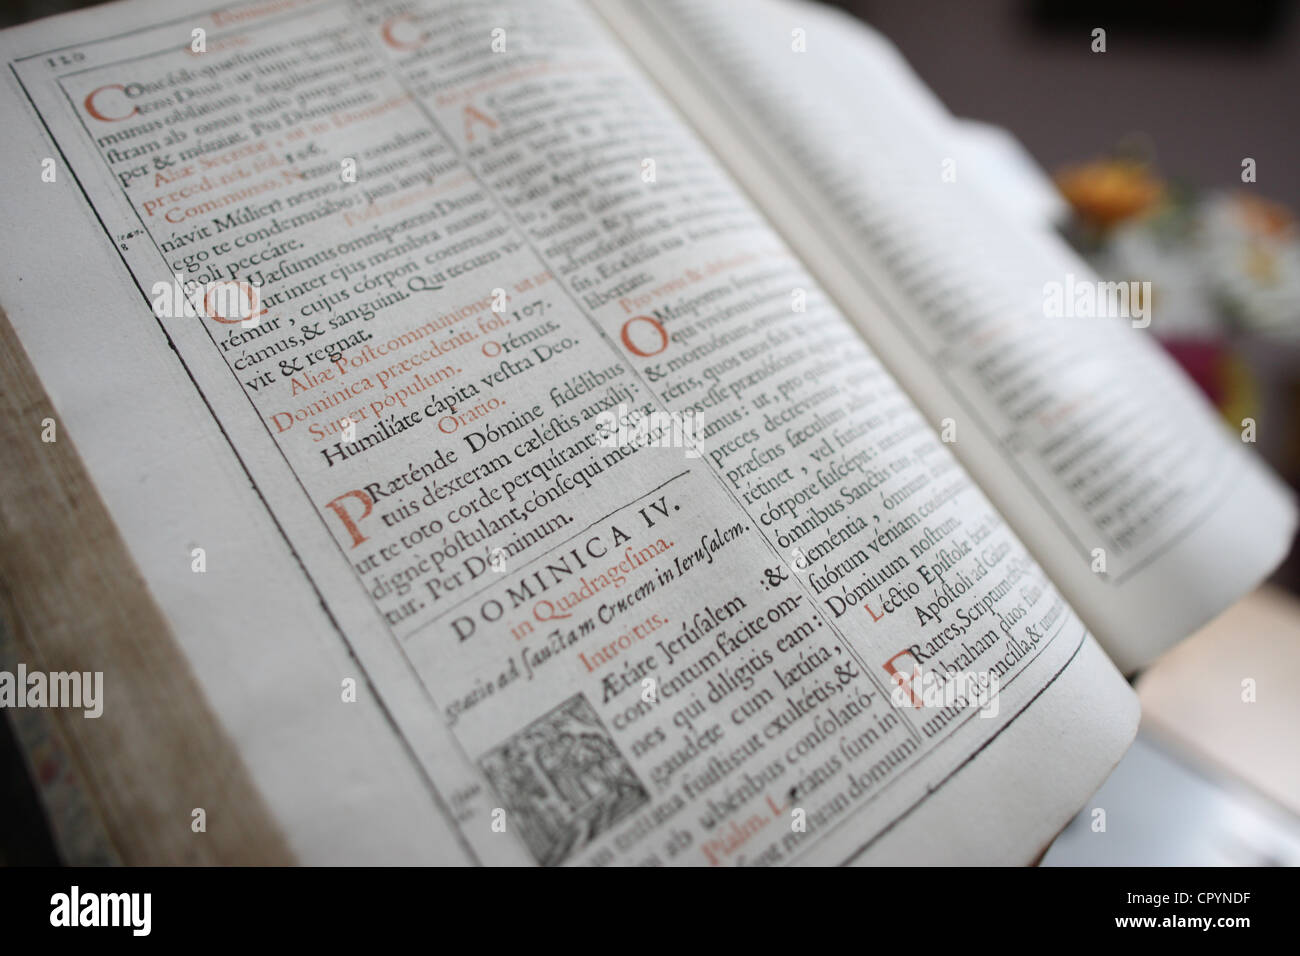 Latin Bible, France, Europe Stock Photo